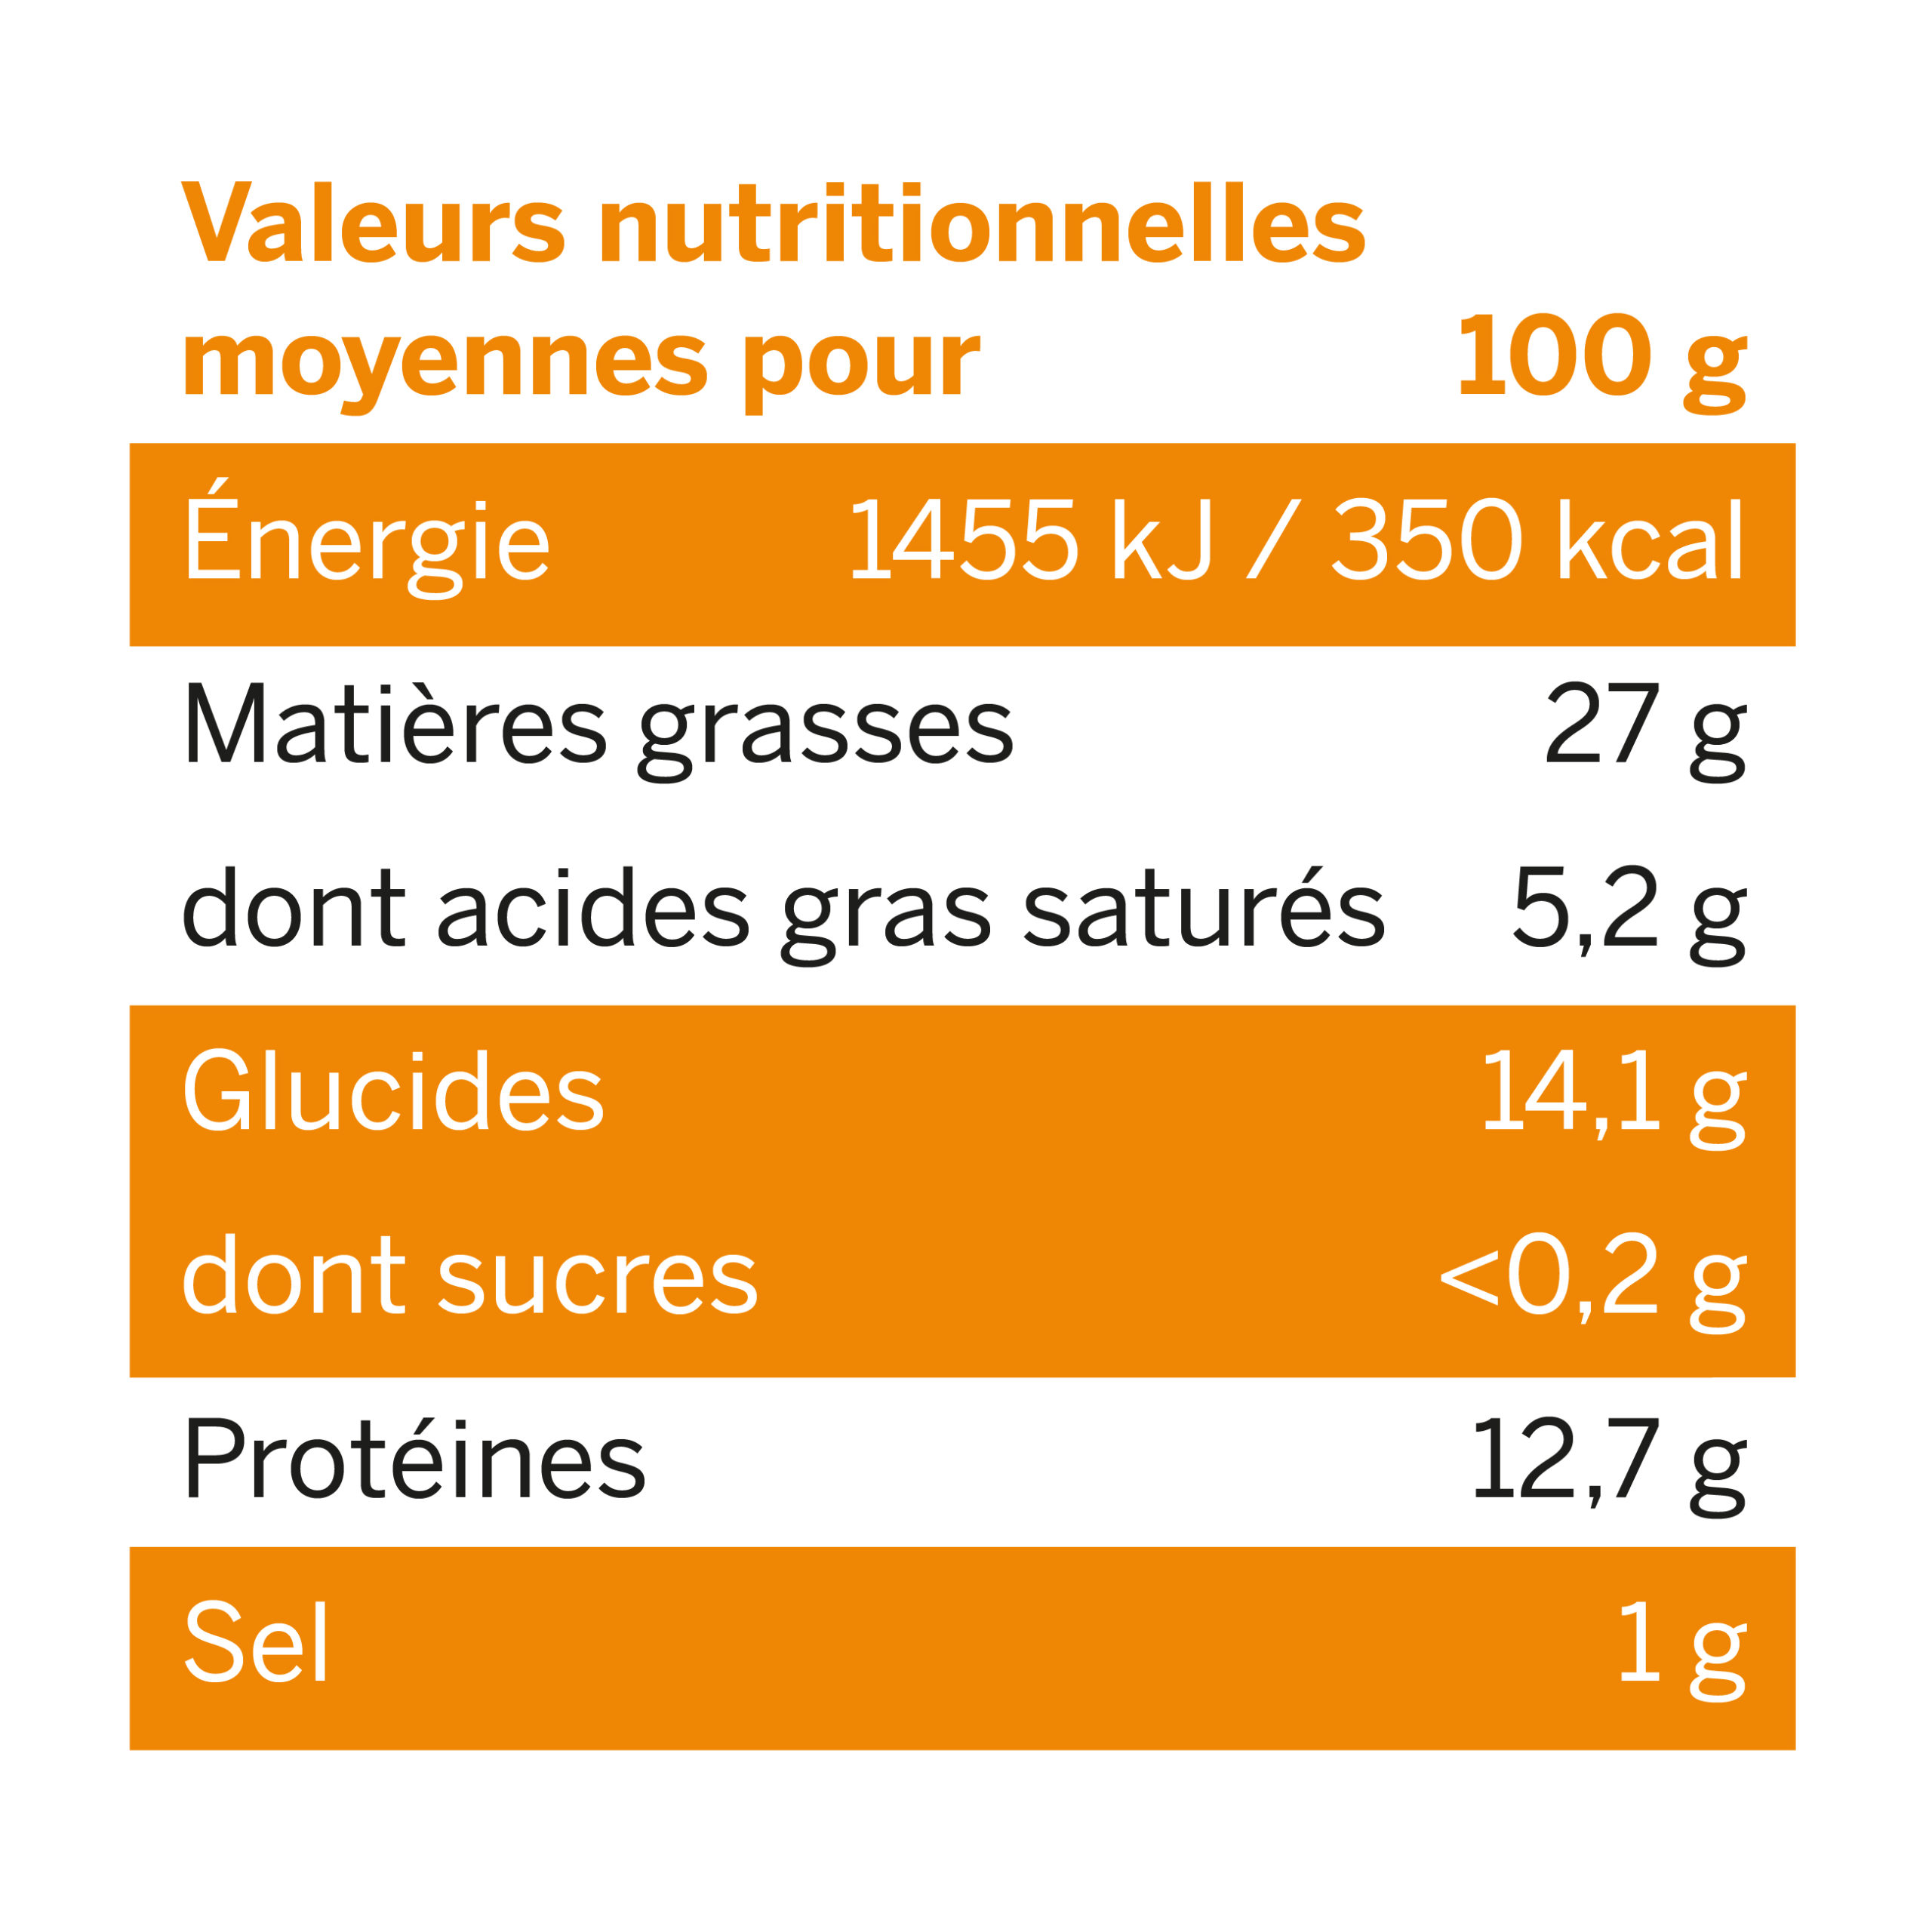 Nutritional value table for the fresh fruit quartet